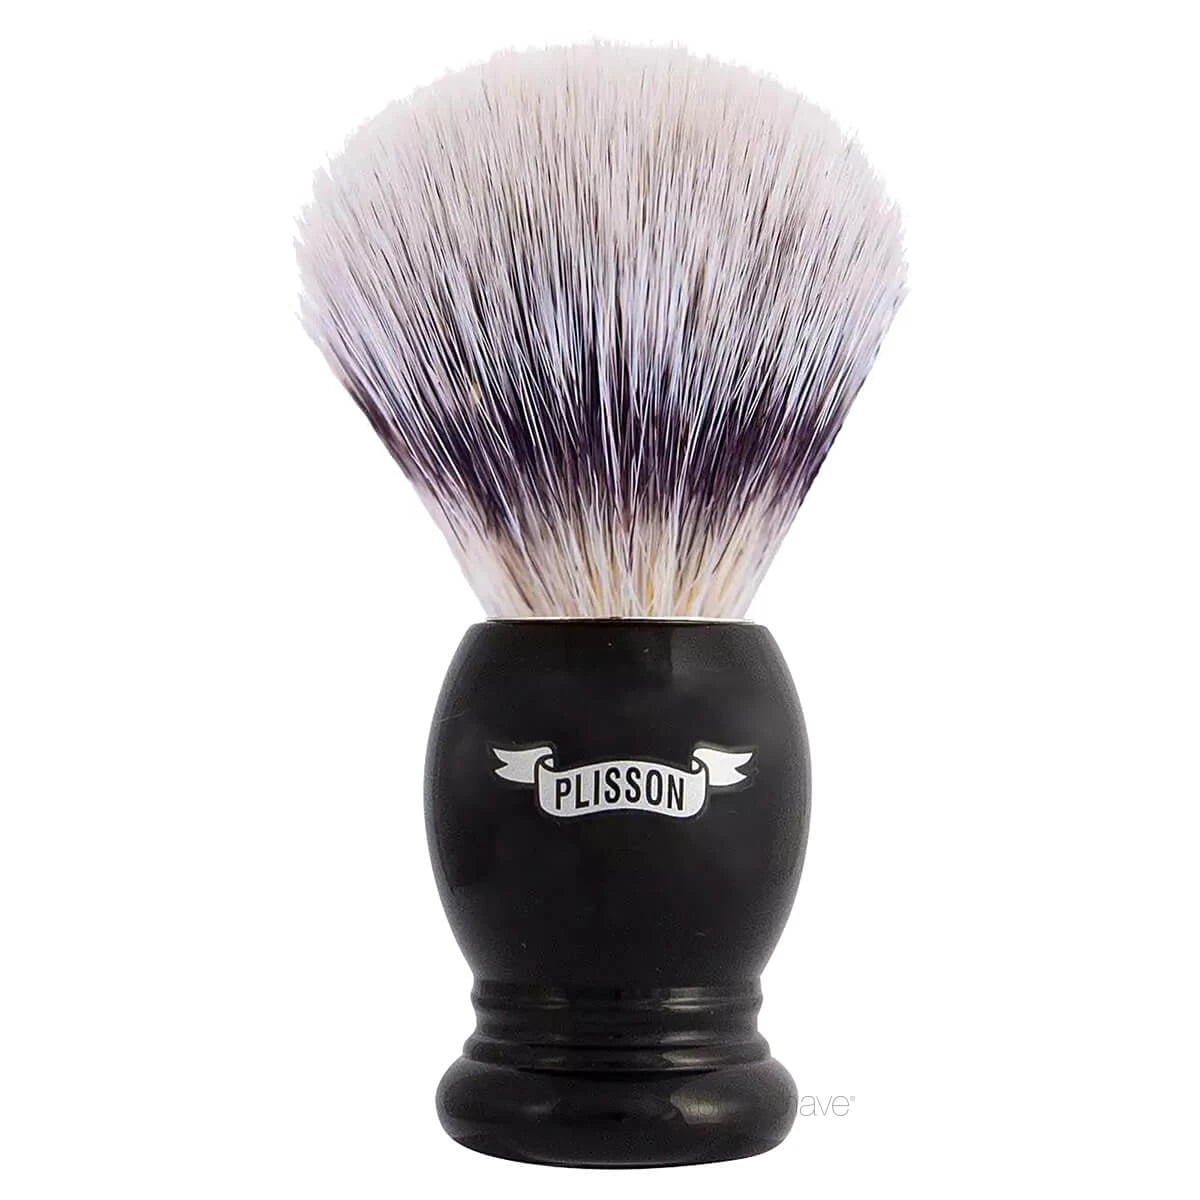 Plisson Shaving Brush, High Mountain White Fibre & Black Acryl- Size 12-Barberkost-Plisson 1808-JK Shop